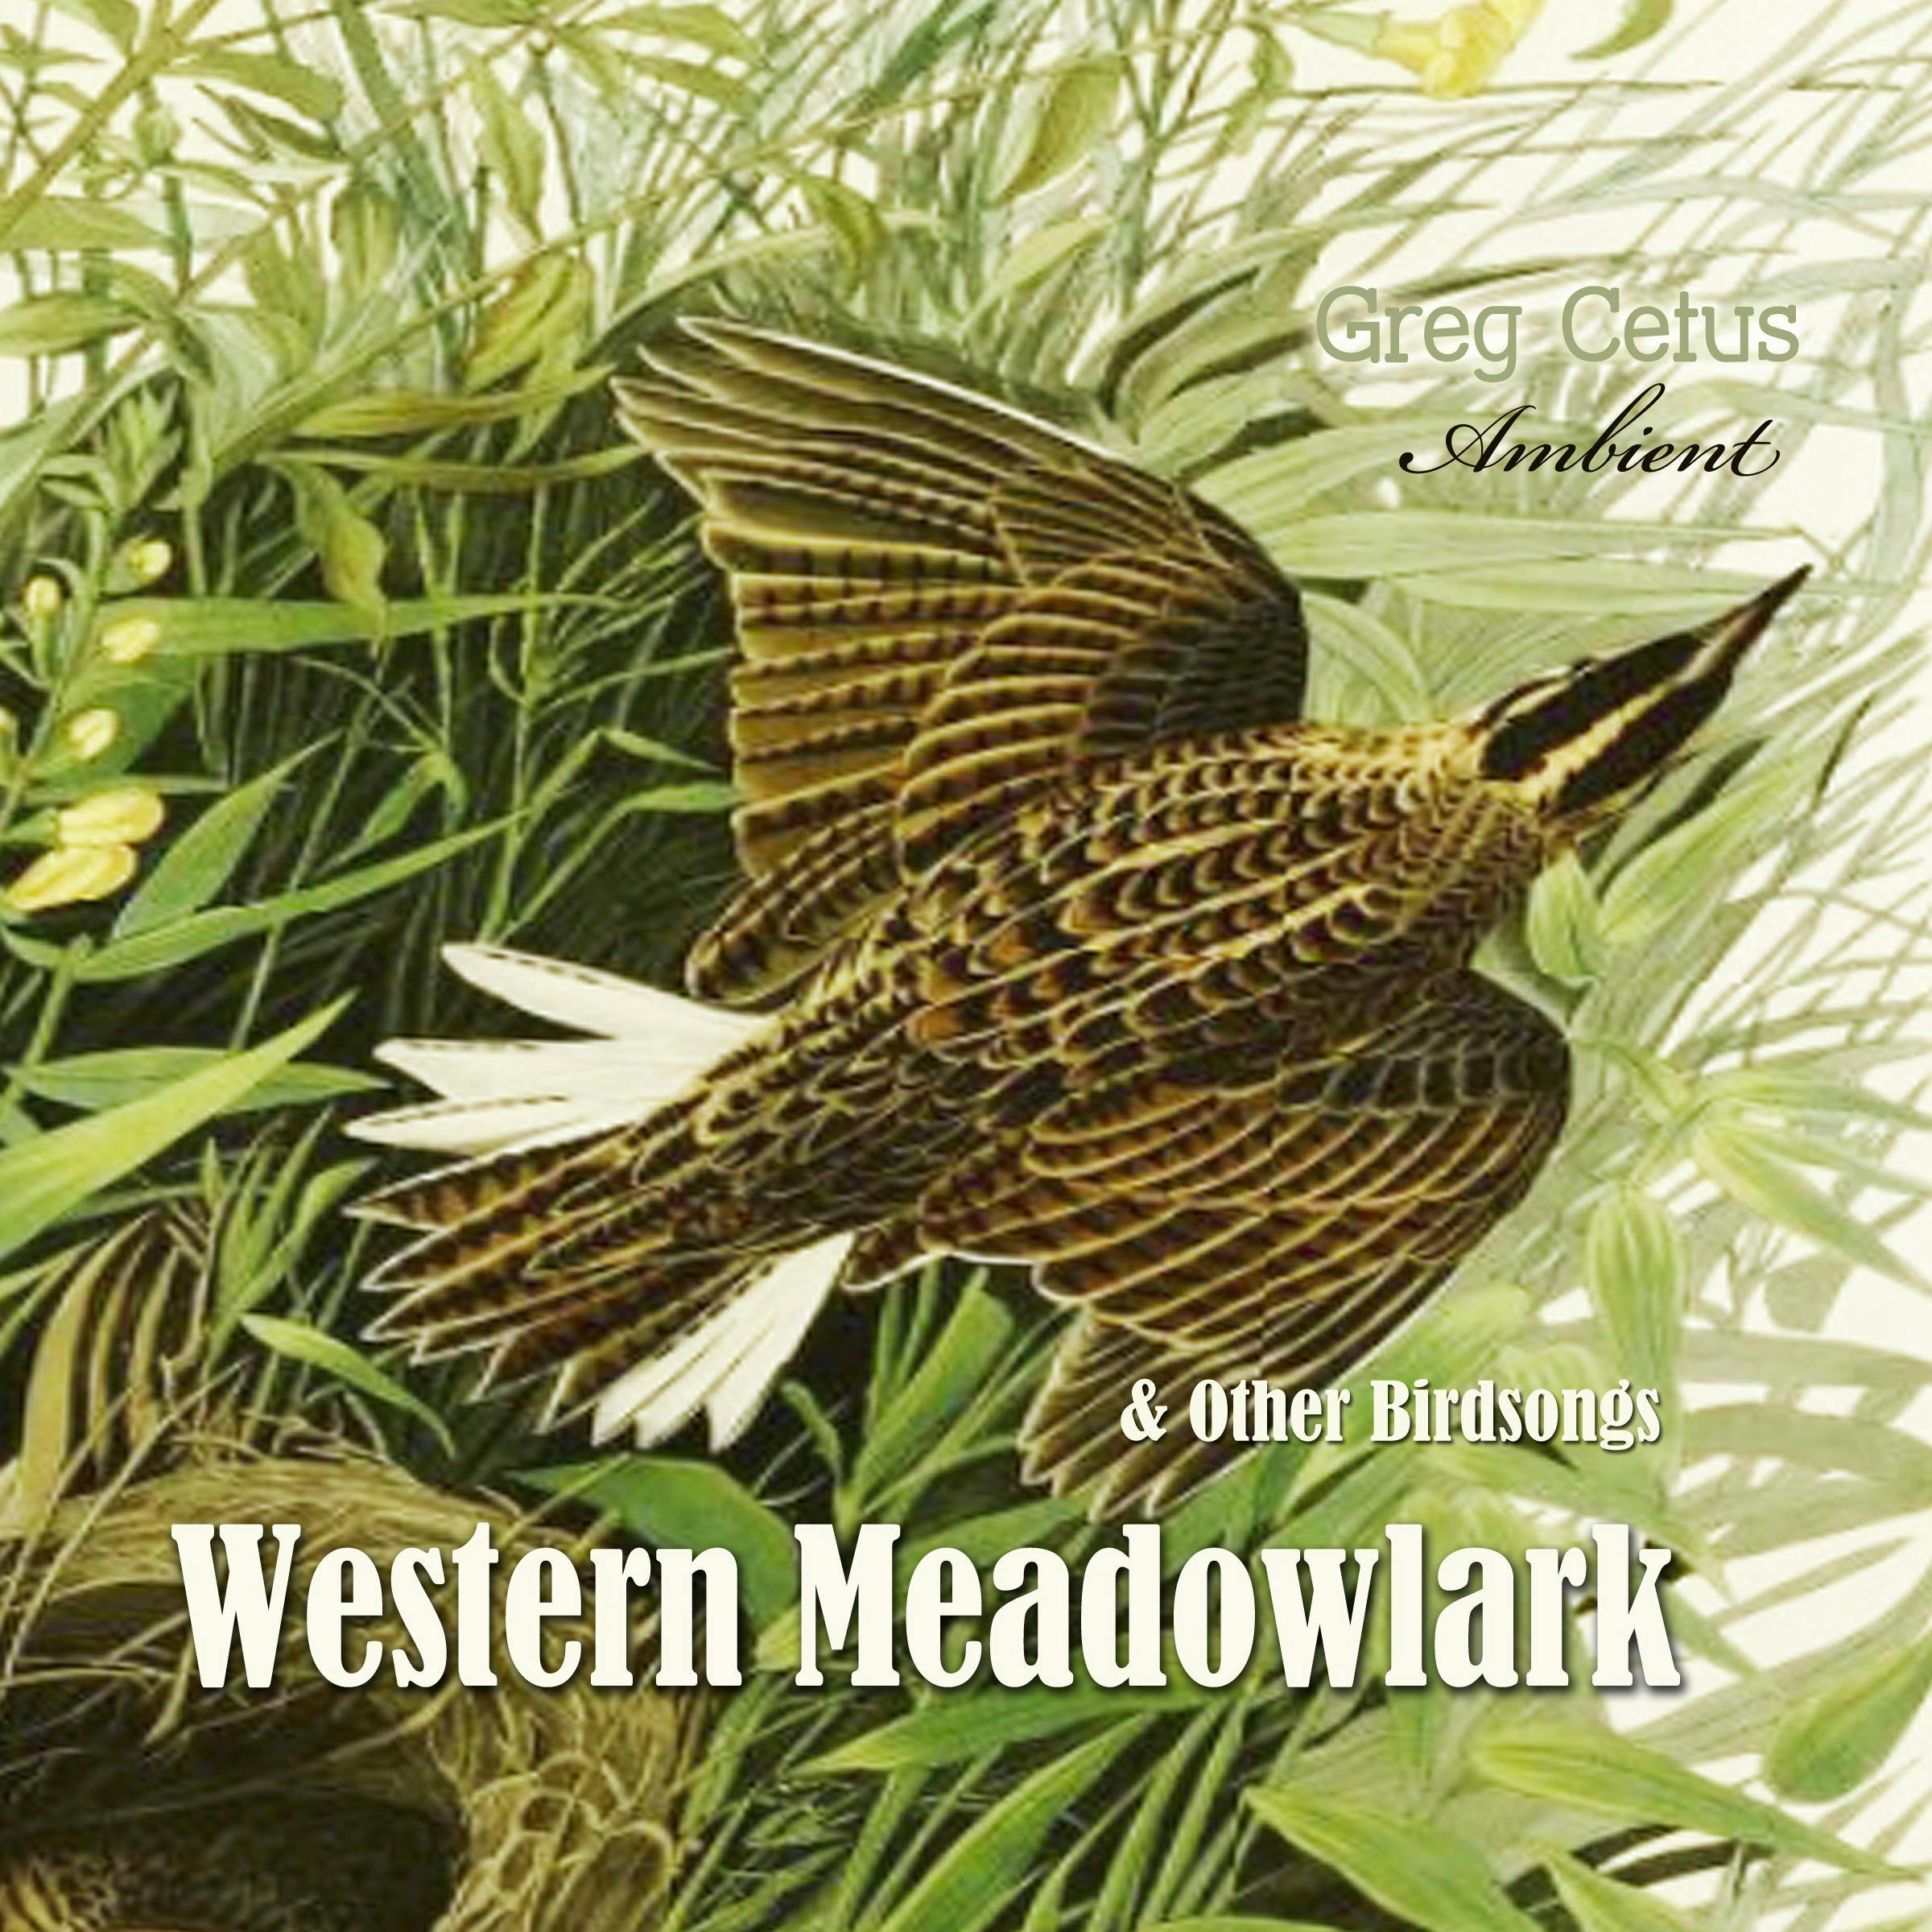 Western Meadowlark and Other Bird Songs - Greg Cetus